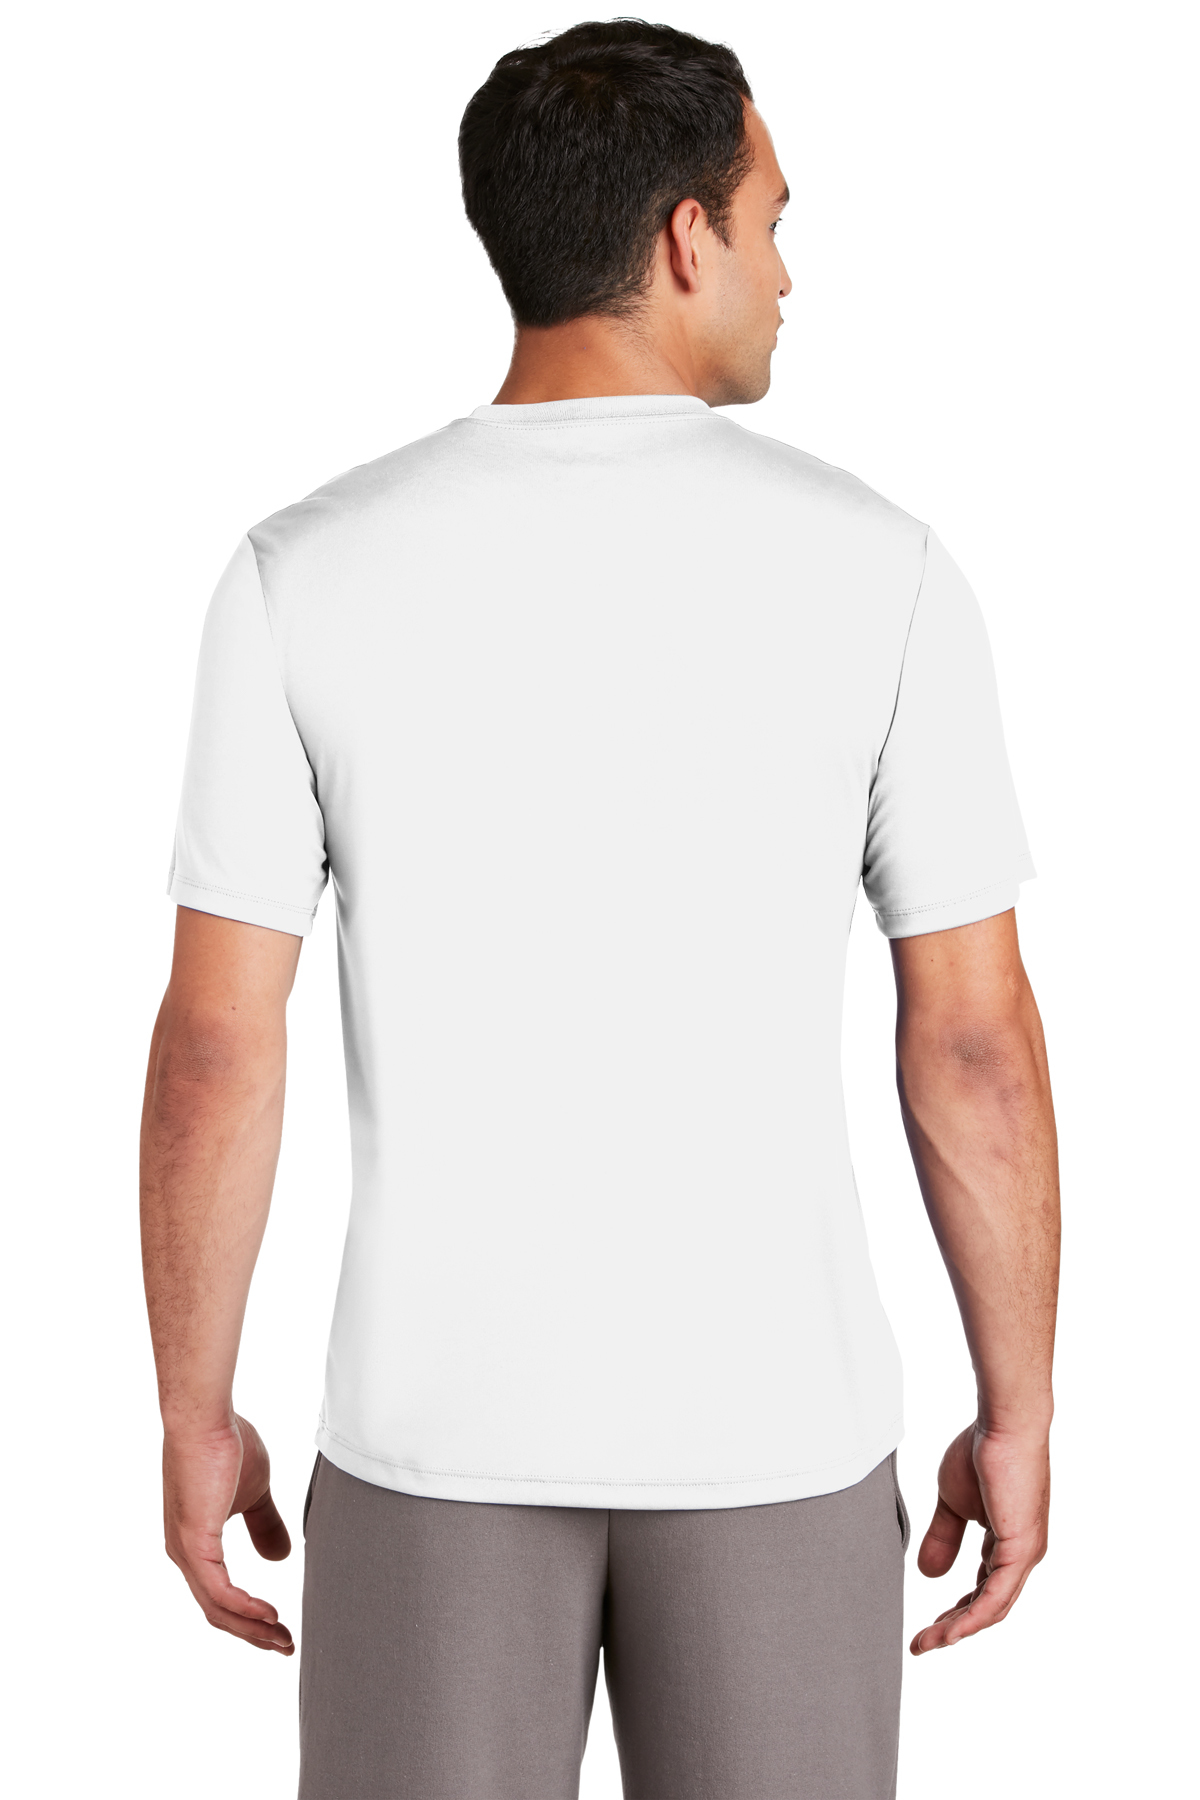 Hanes Cool Dri Performance T-Shirt | Product | Online Apparel Market